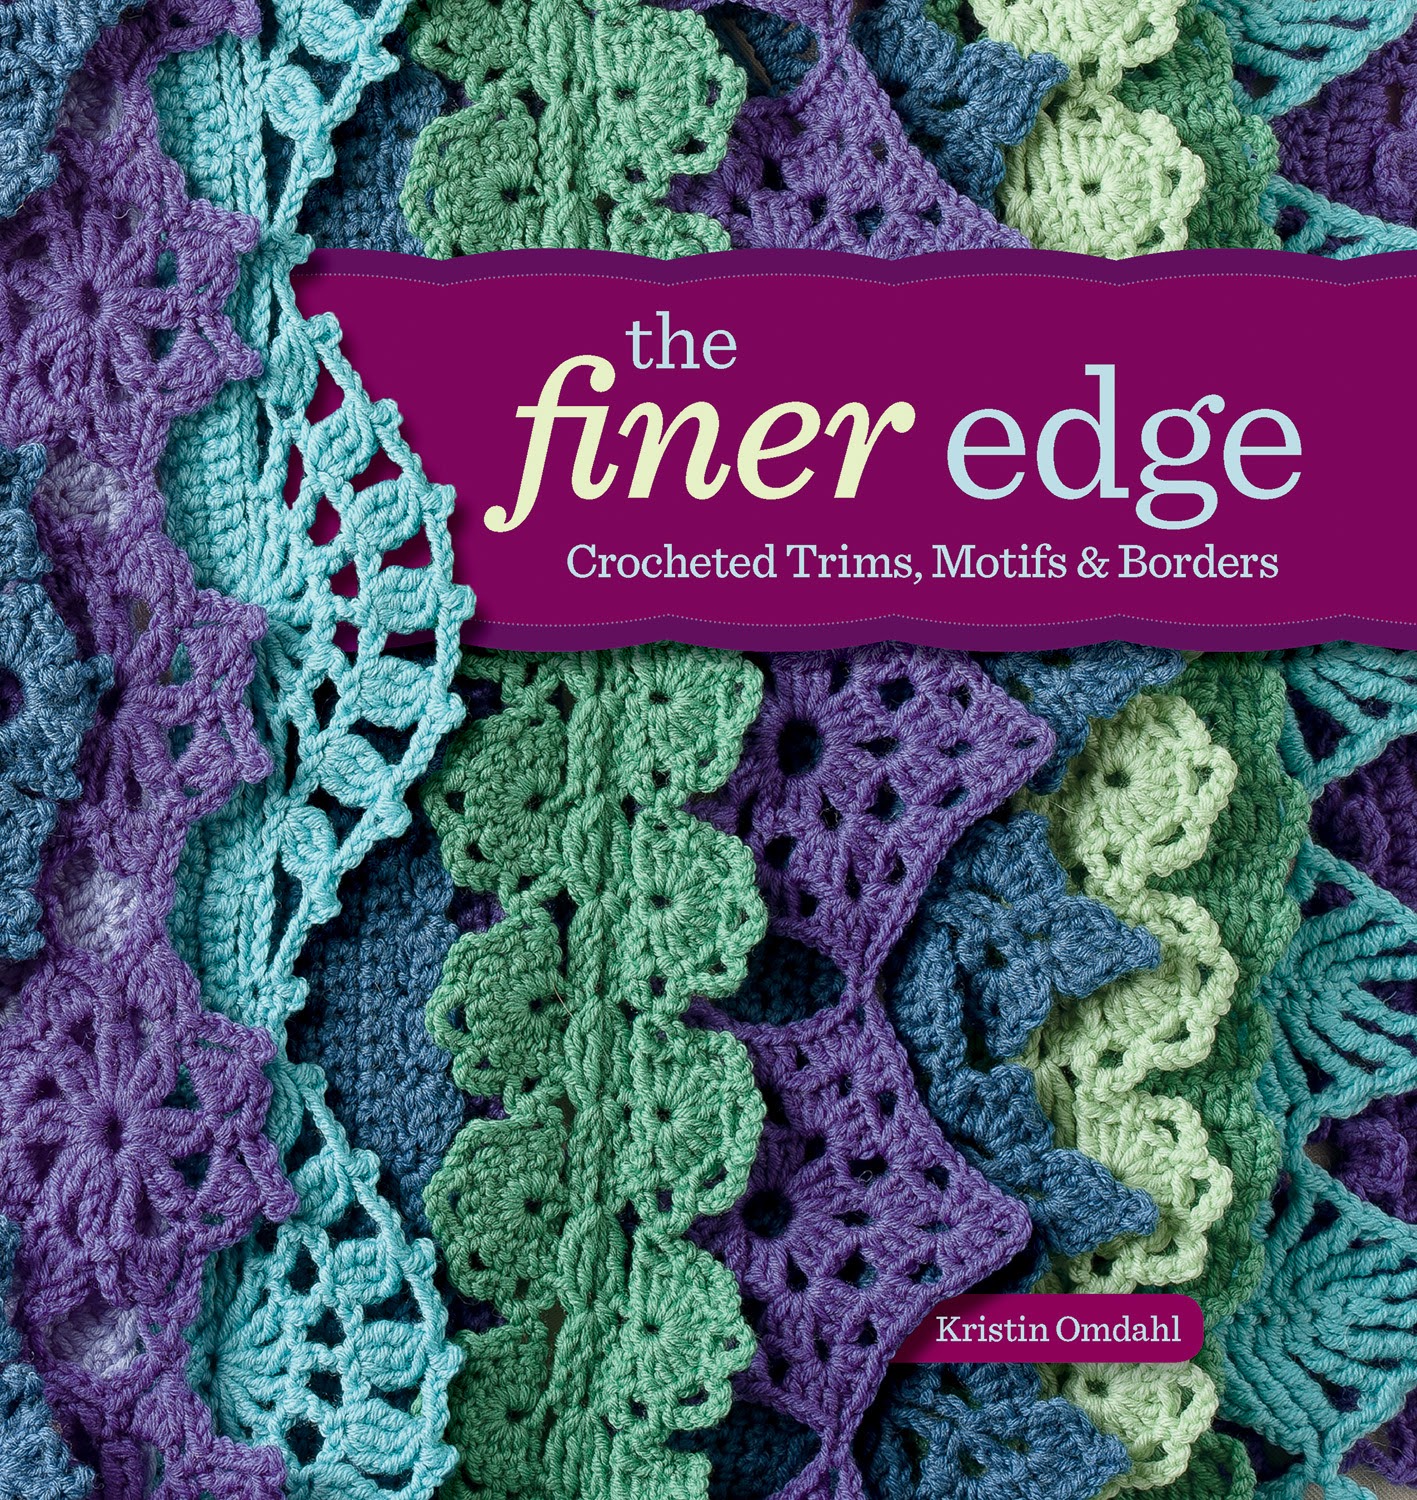 Book Reviews Crochet Titles - A Spoonful Of Sugar